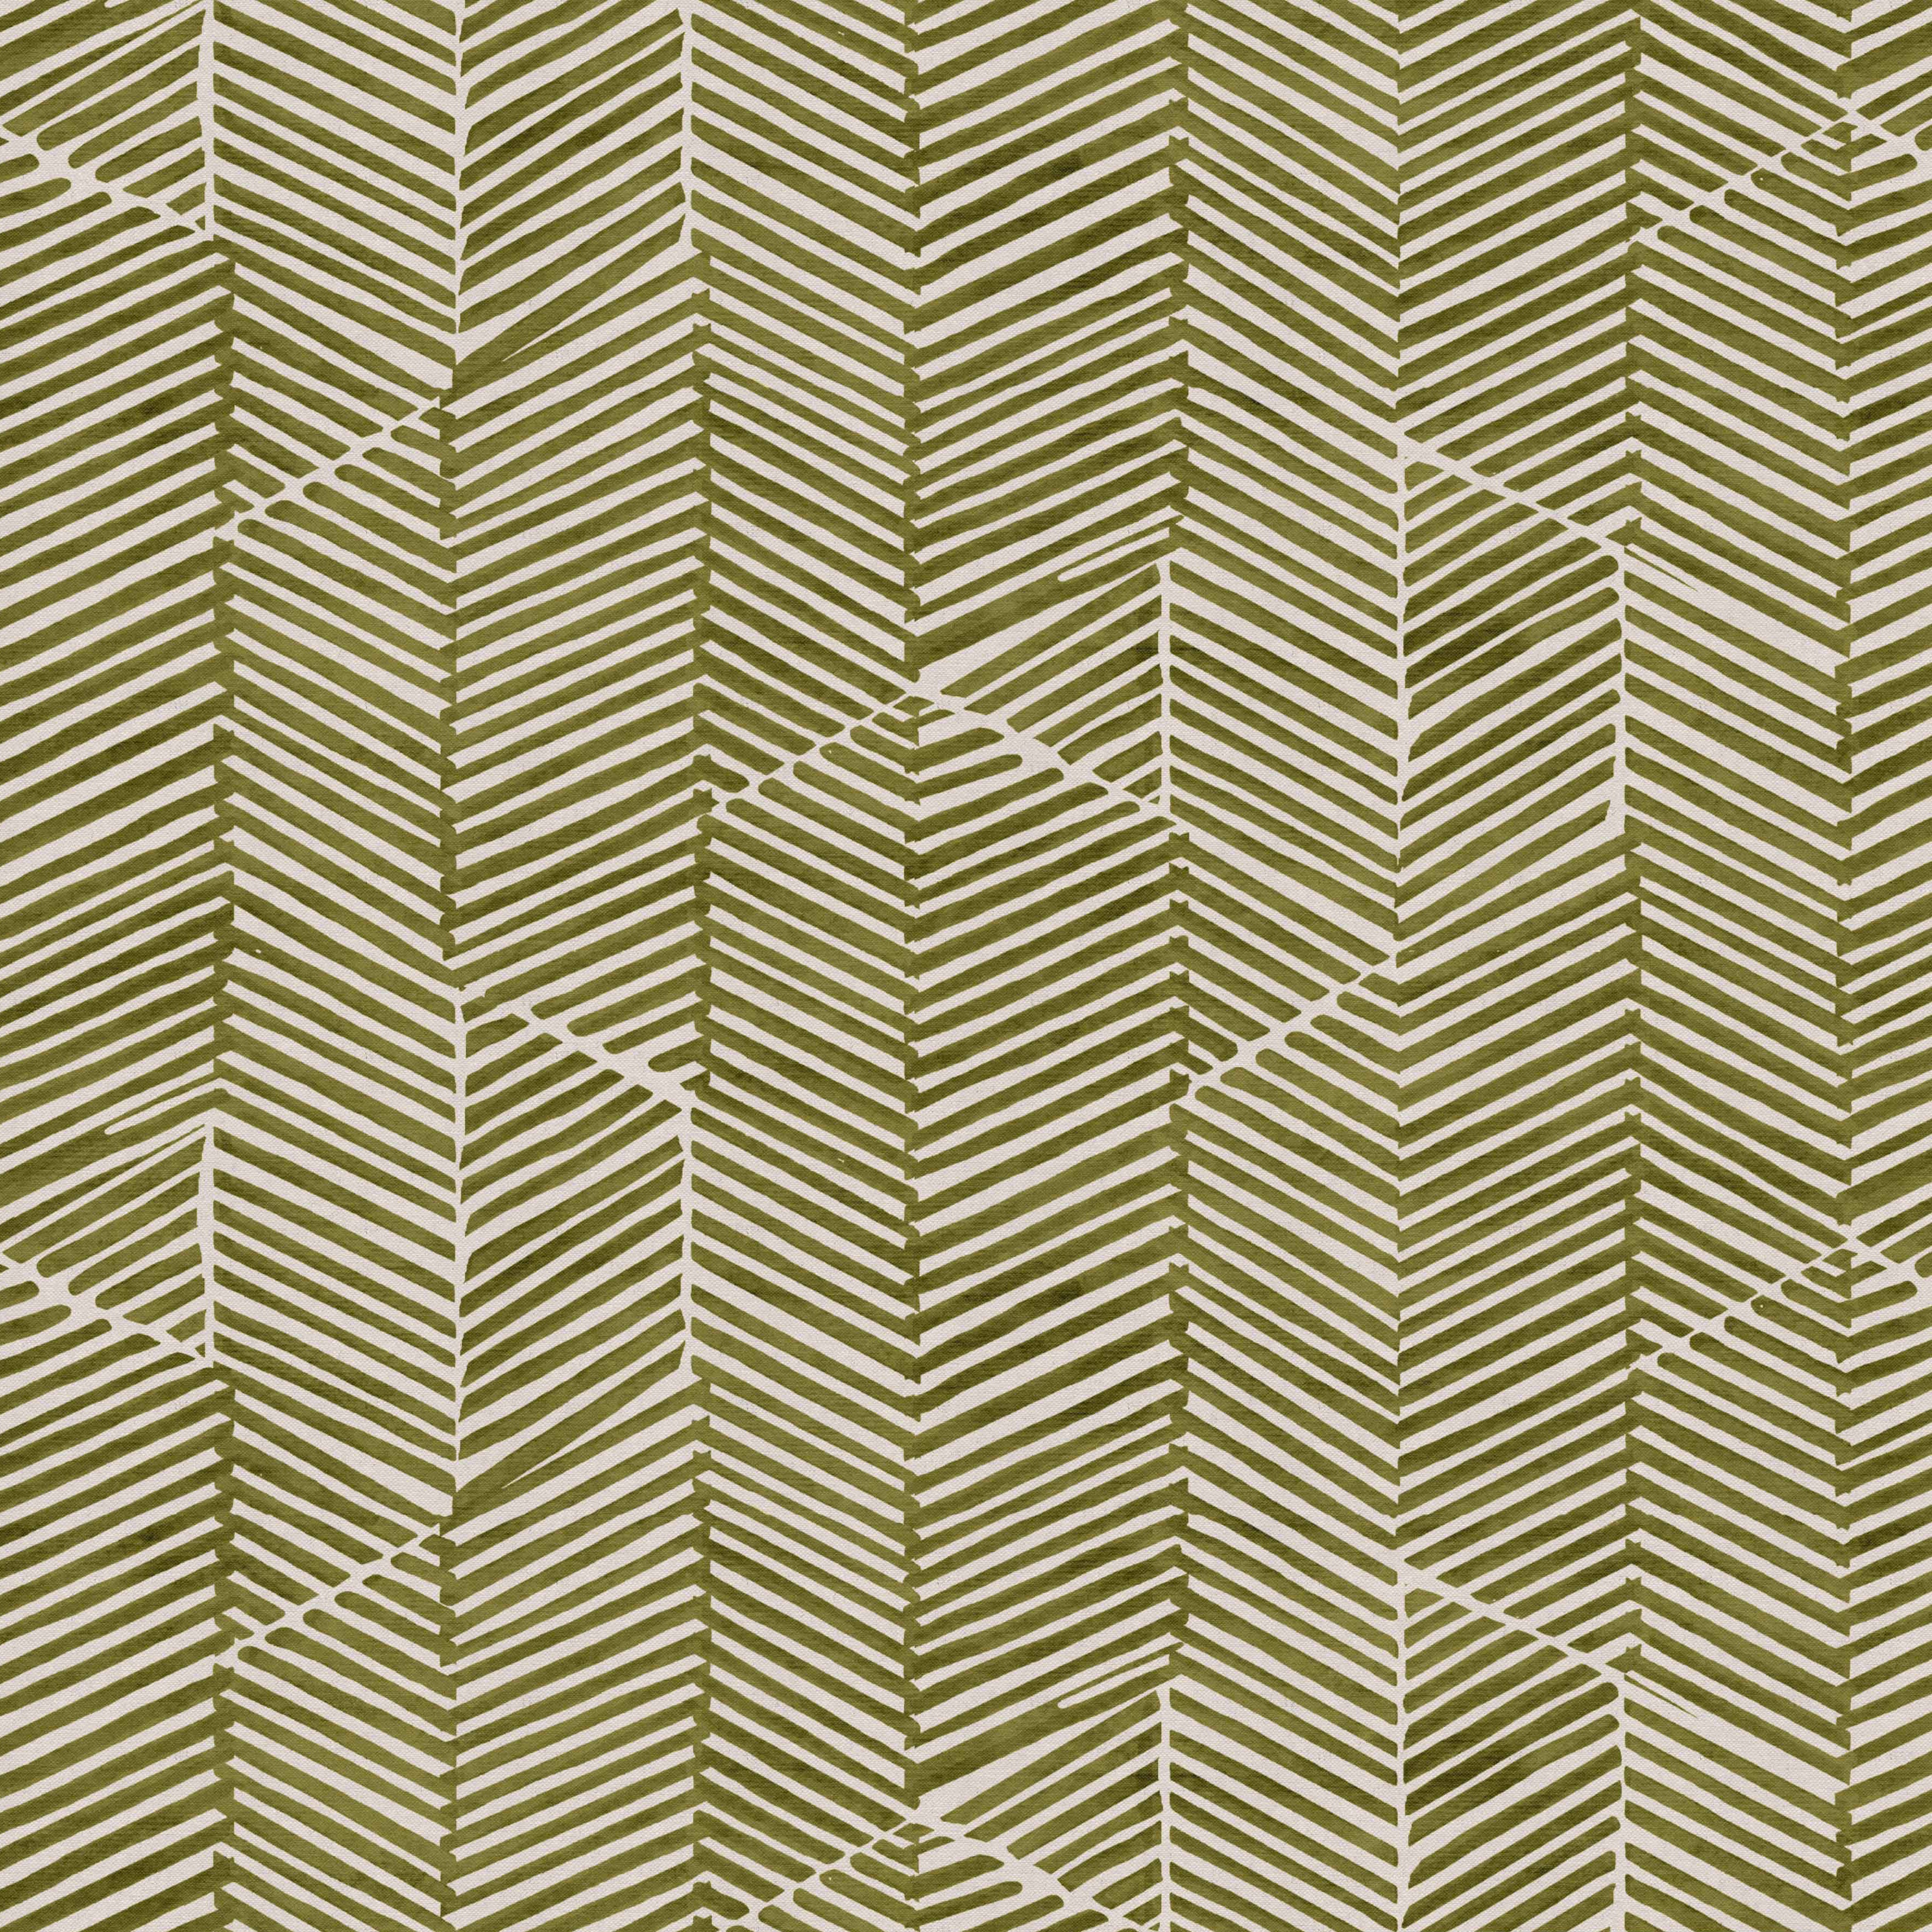 Detail of fabric in a dense herringbone print in olive on a tan field.